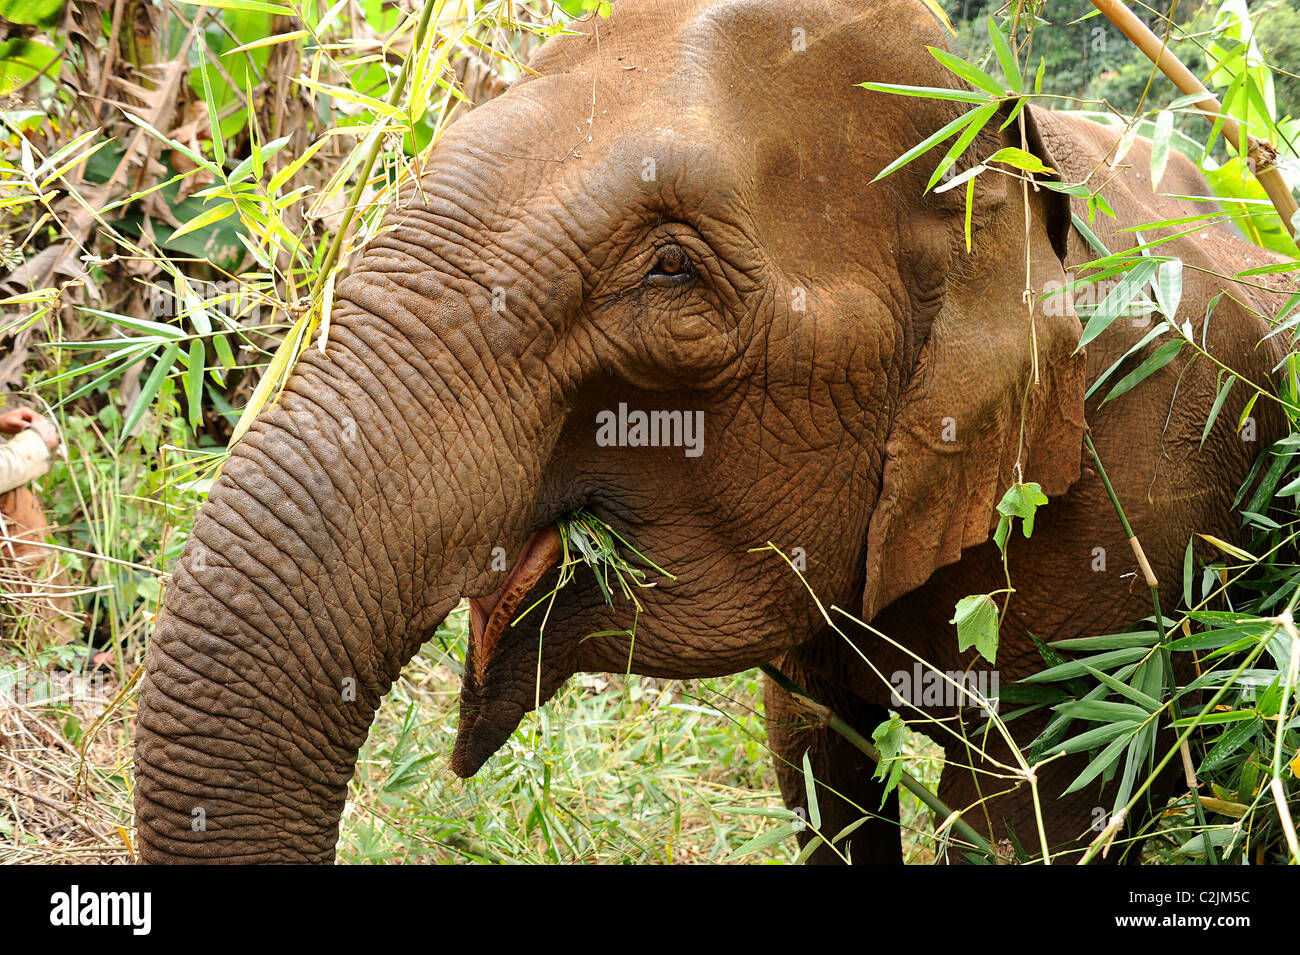 Elephant enjoying the freedom and natural habitat of Elephant Valley, Sen Monorom, Mondulkiri Province, Cambodia Stock Photo